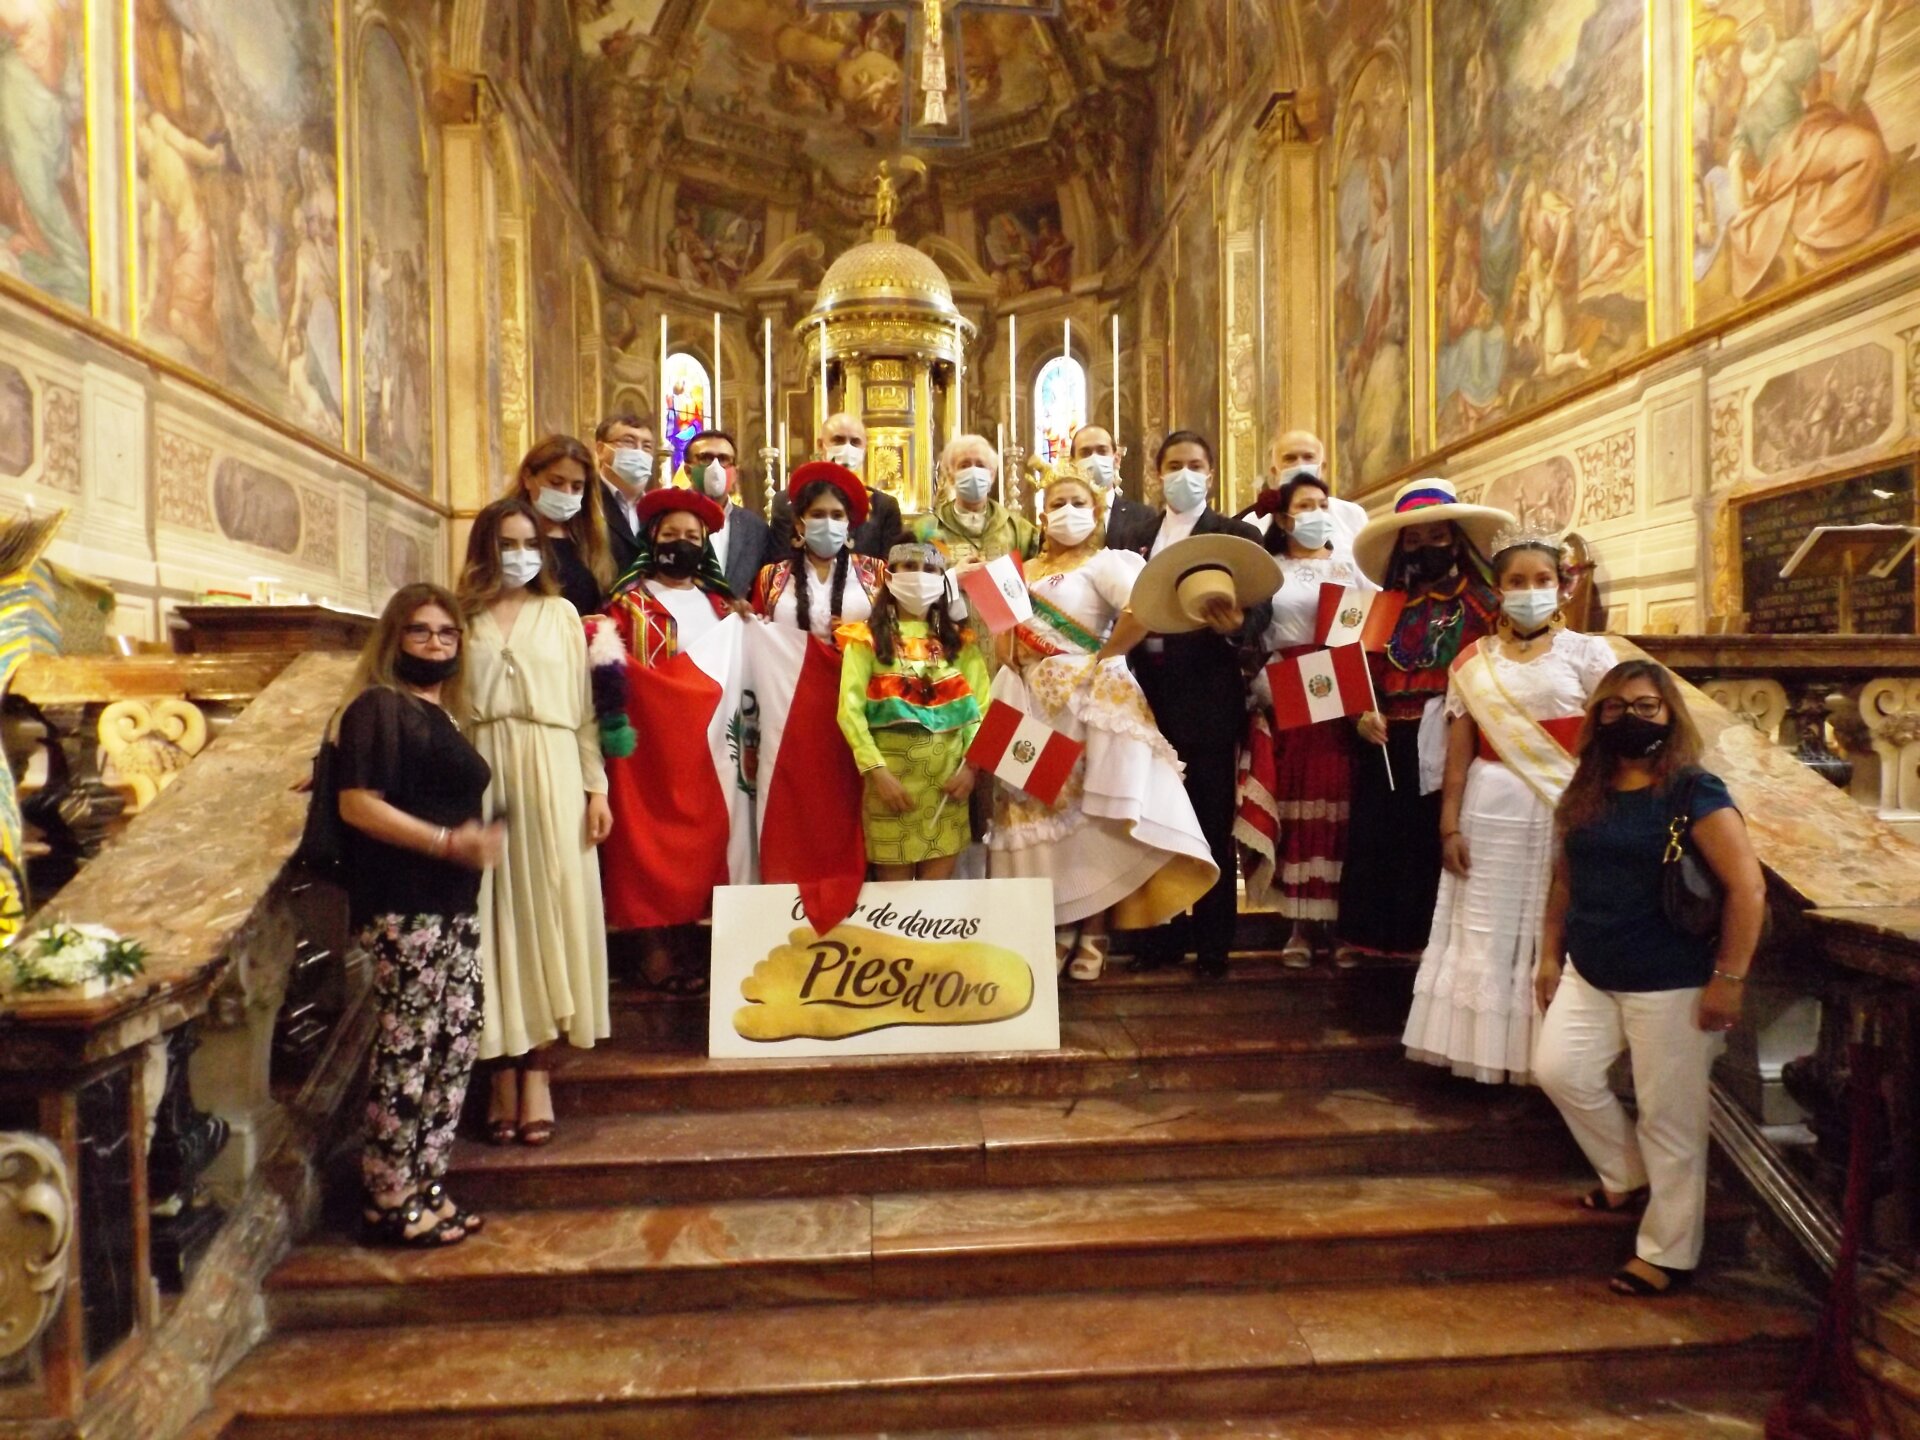 In Duomo festa peruviana